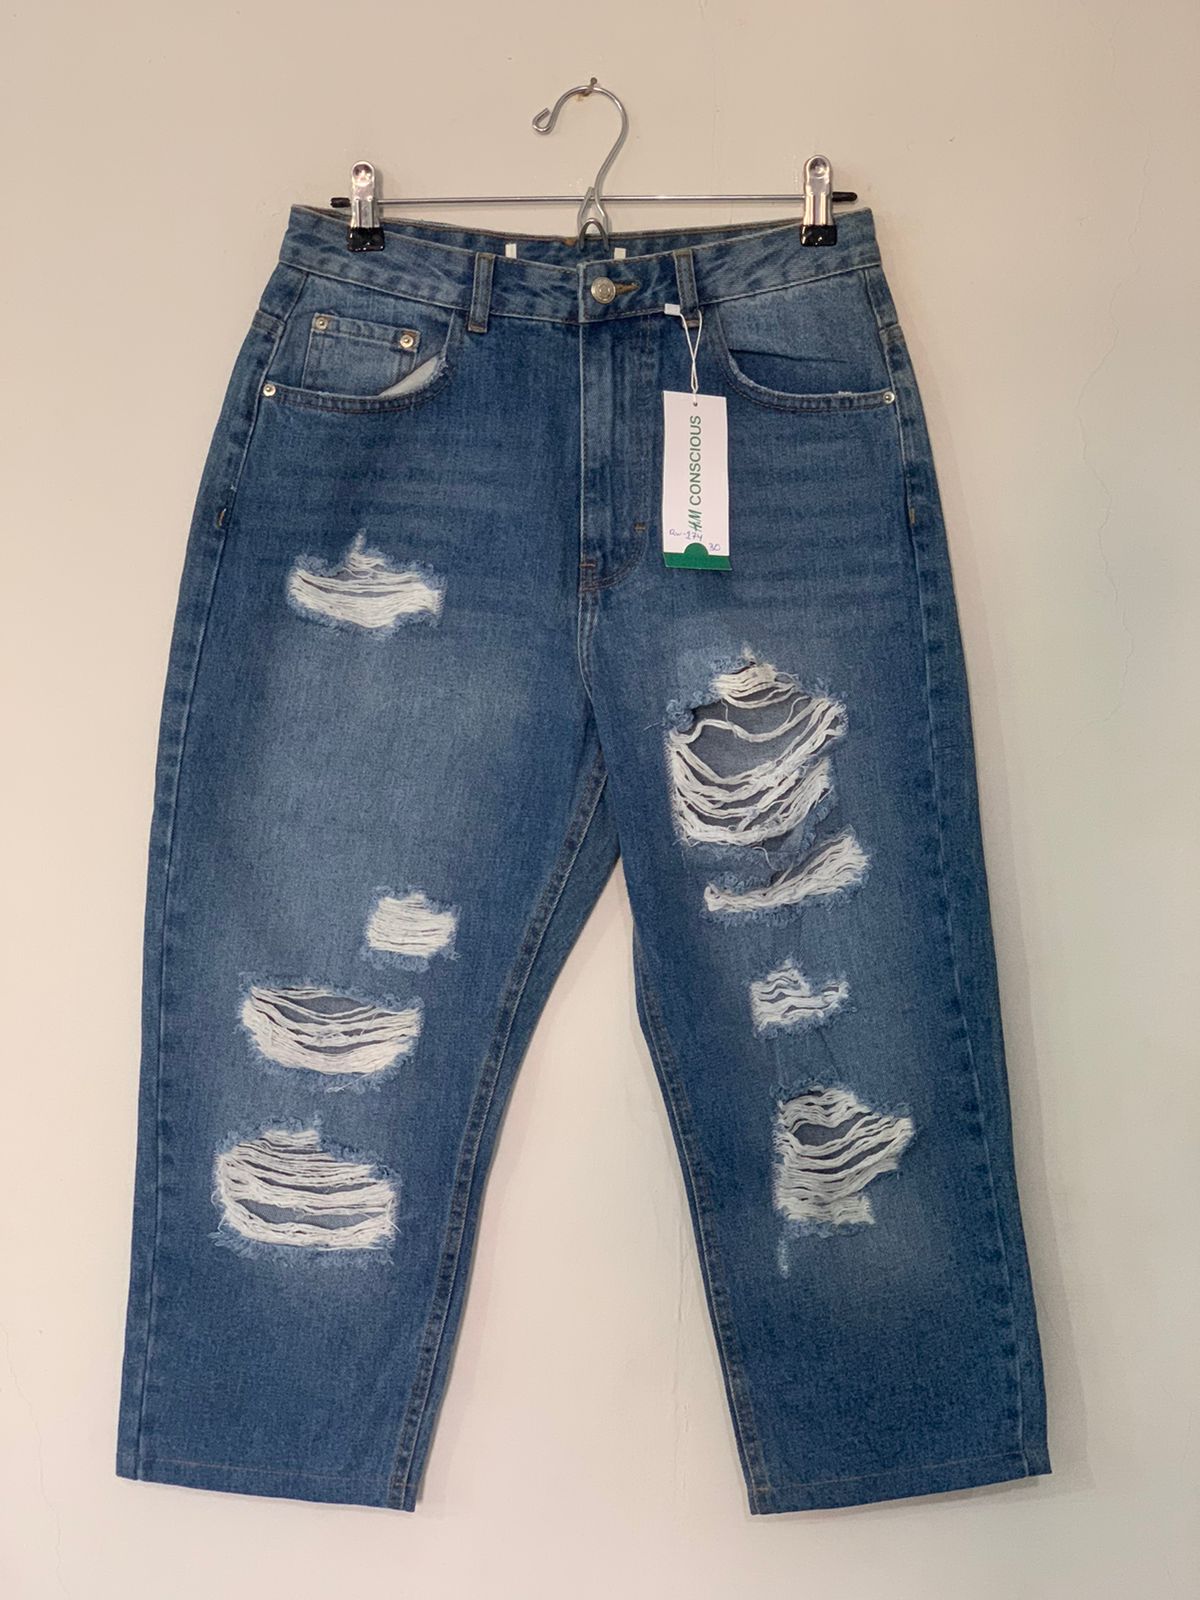 Blue High-Waist Ripped Mom Jeans (MINOR FAULT)(Length:31-32)